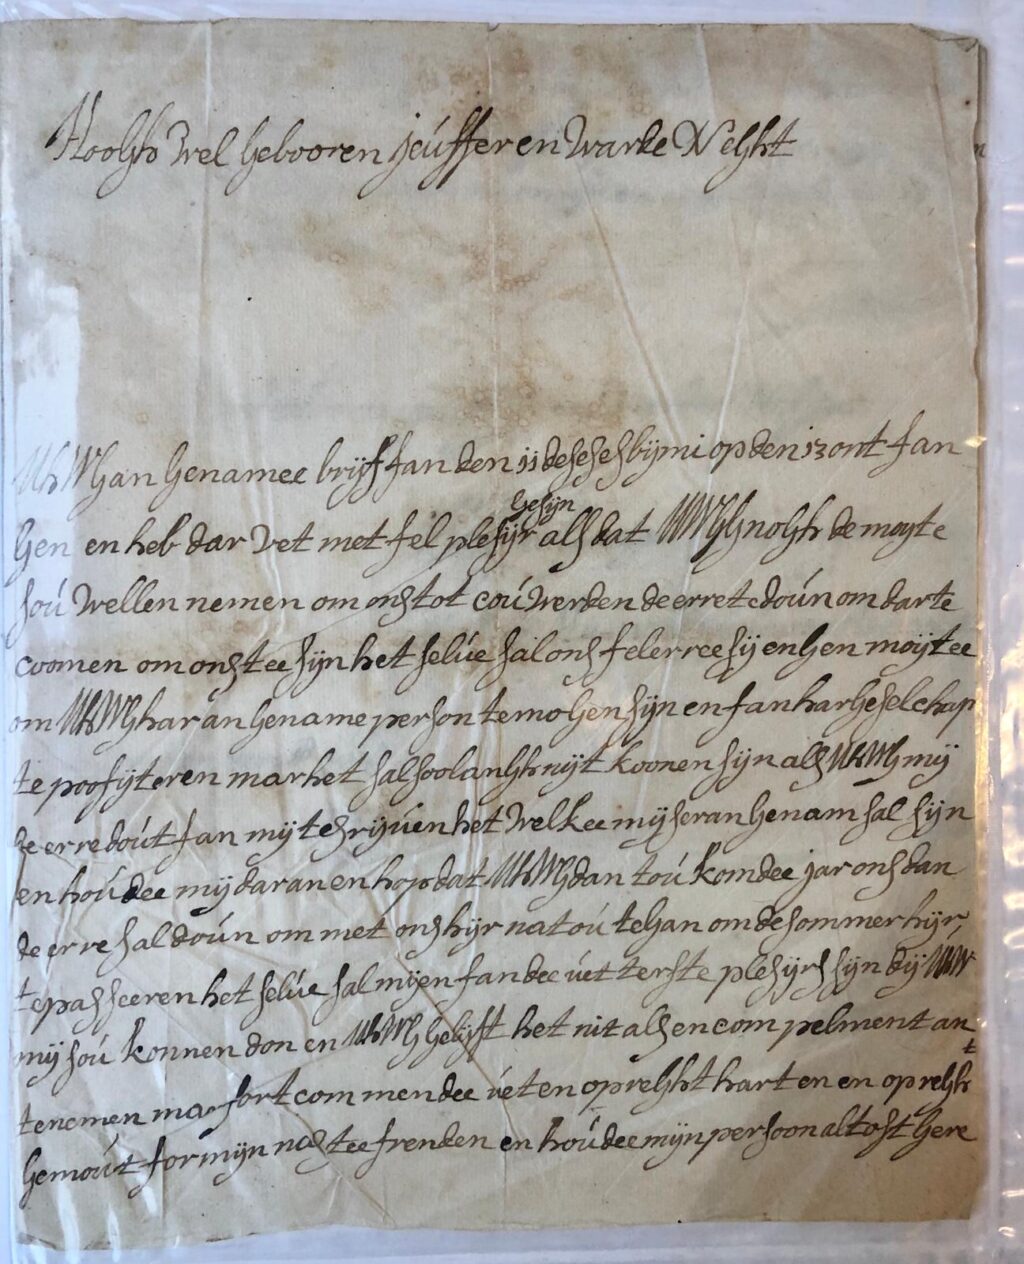 [Manuscript 1727] Brief van W.M. van Humalda geb. Hannia, dd. Coevorden 1727, aan “waarde night”, manuscript, 1 p.